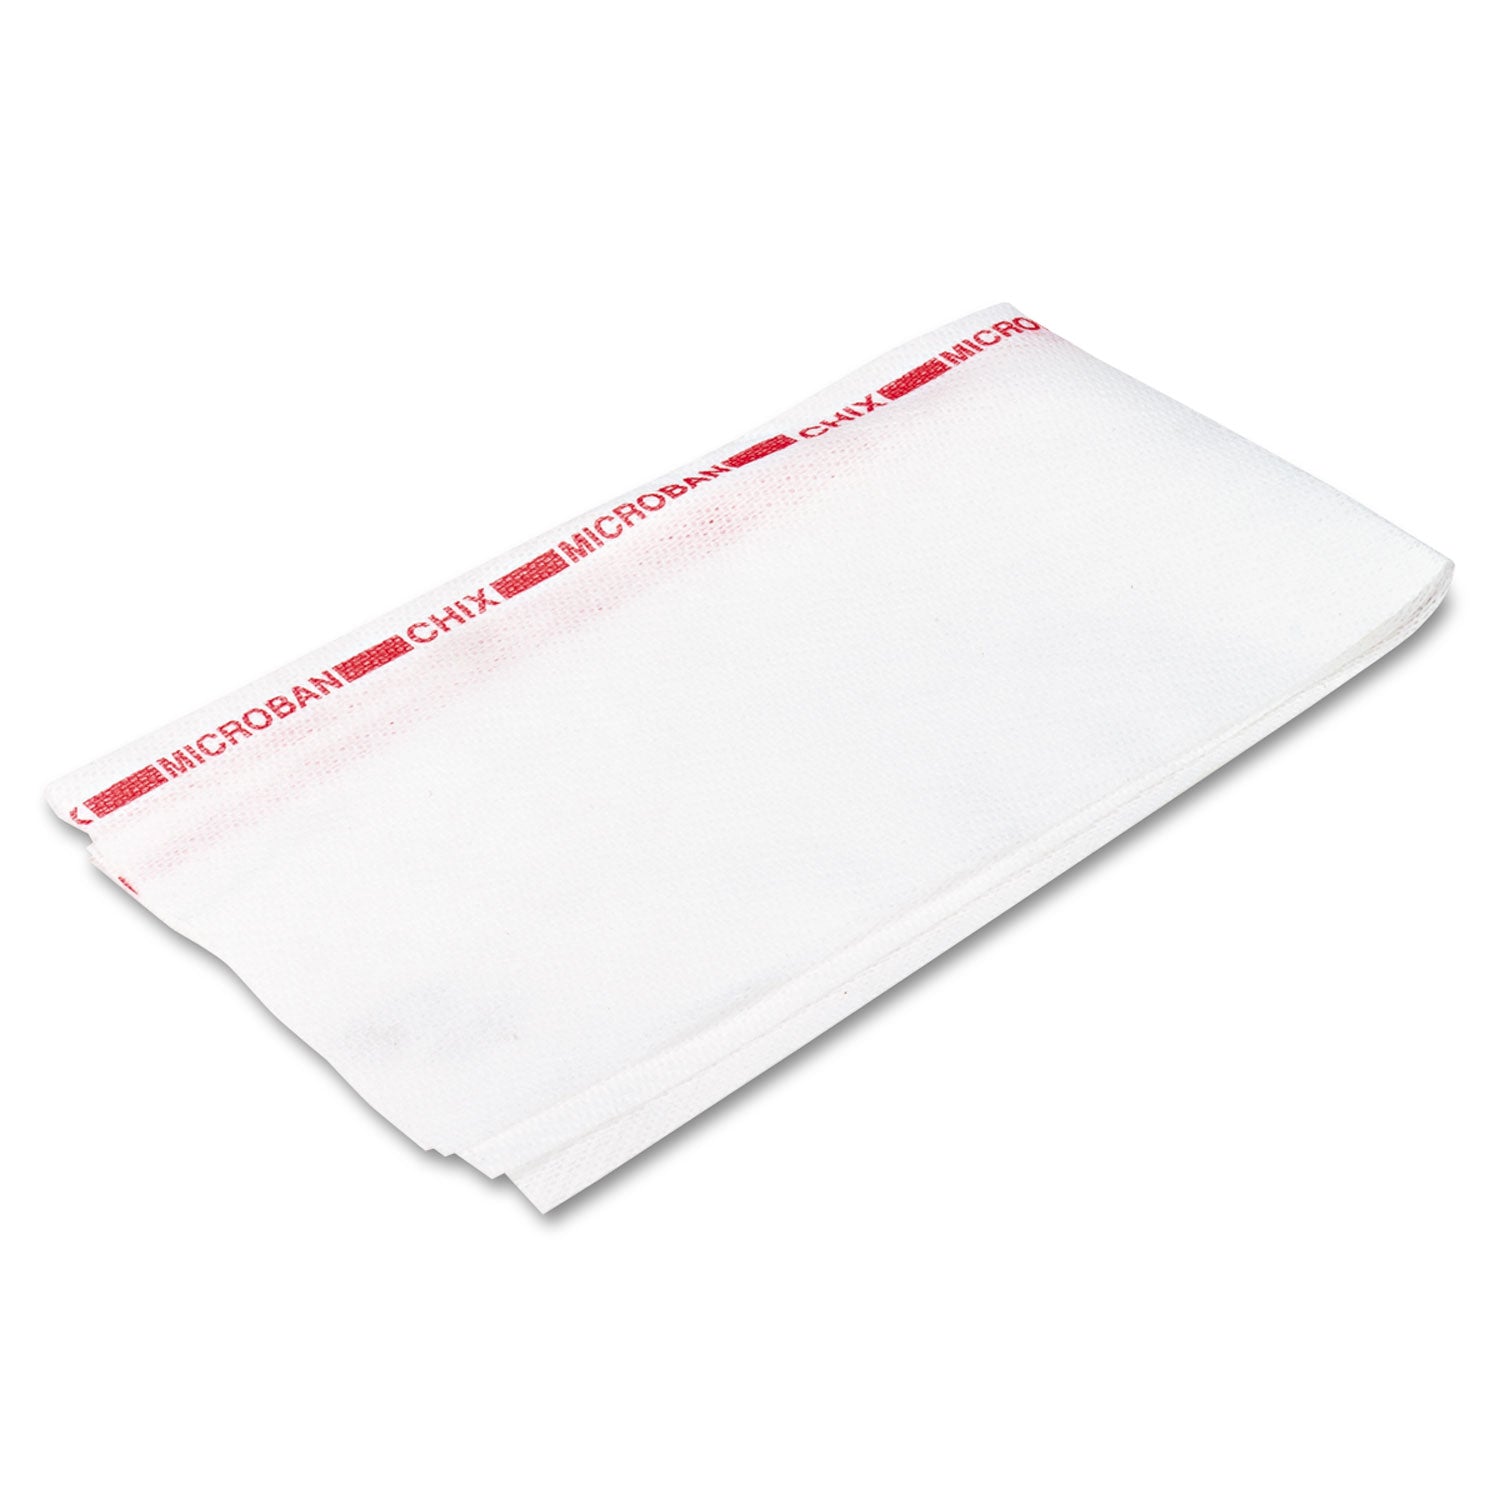 Reusable Food Service Towels, Fabric, 13 x 24, White, 150/Carton - 